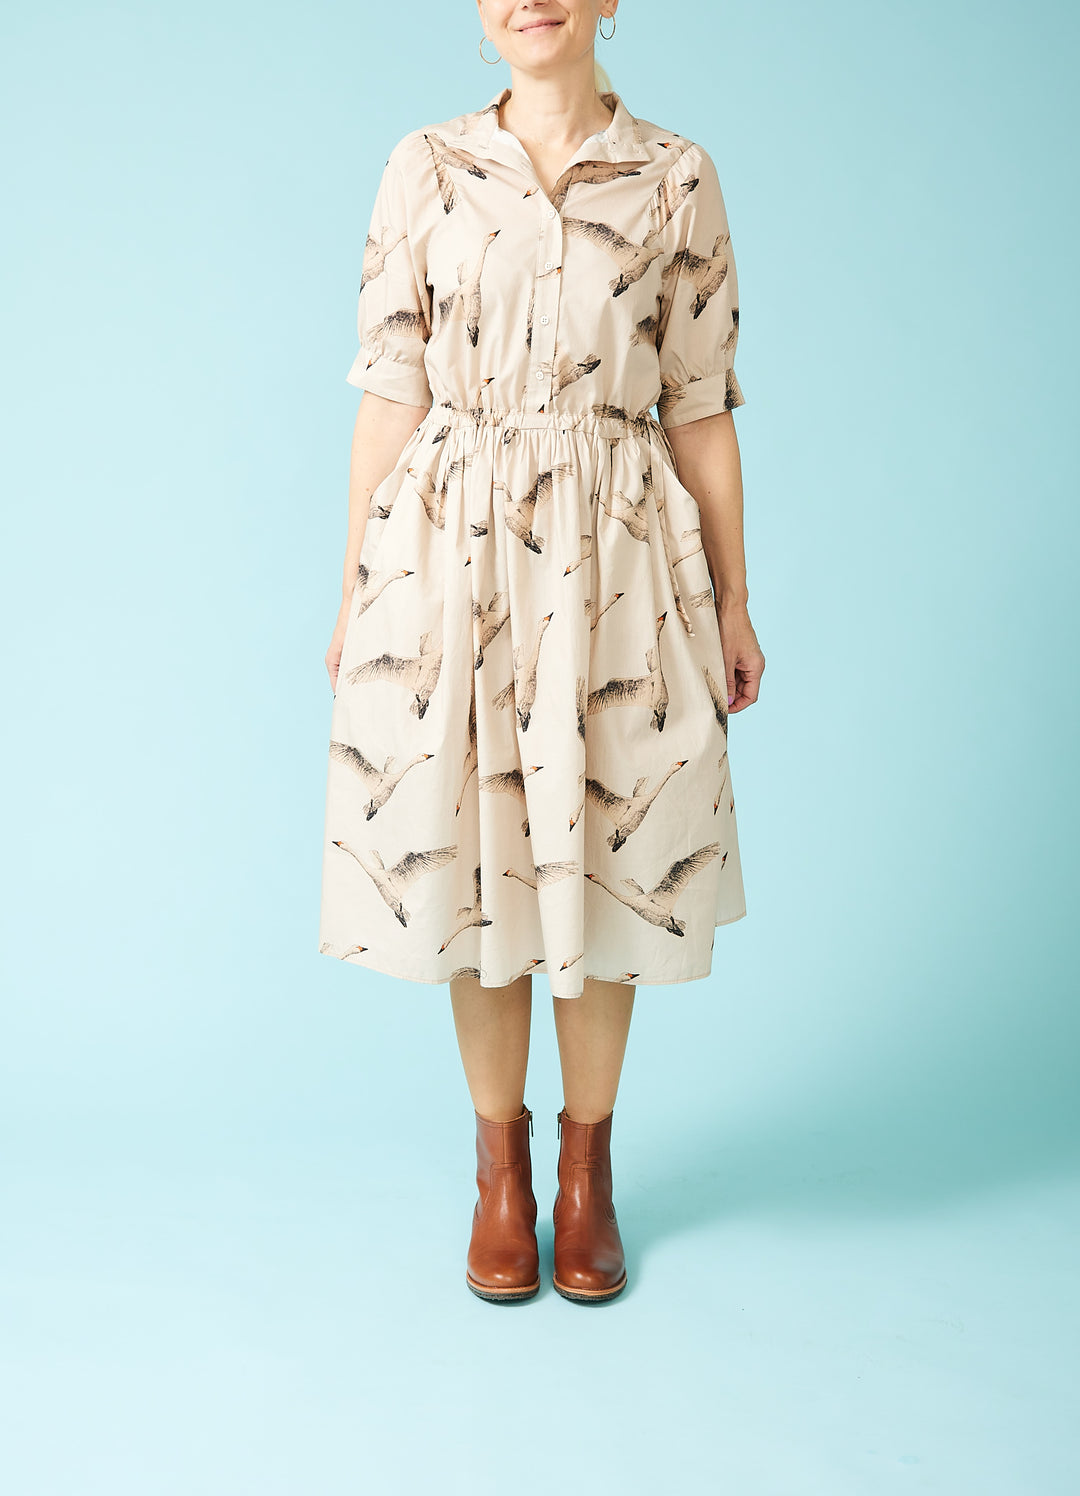 Ellinor kjolen - Beige med svaner